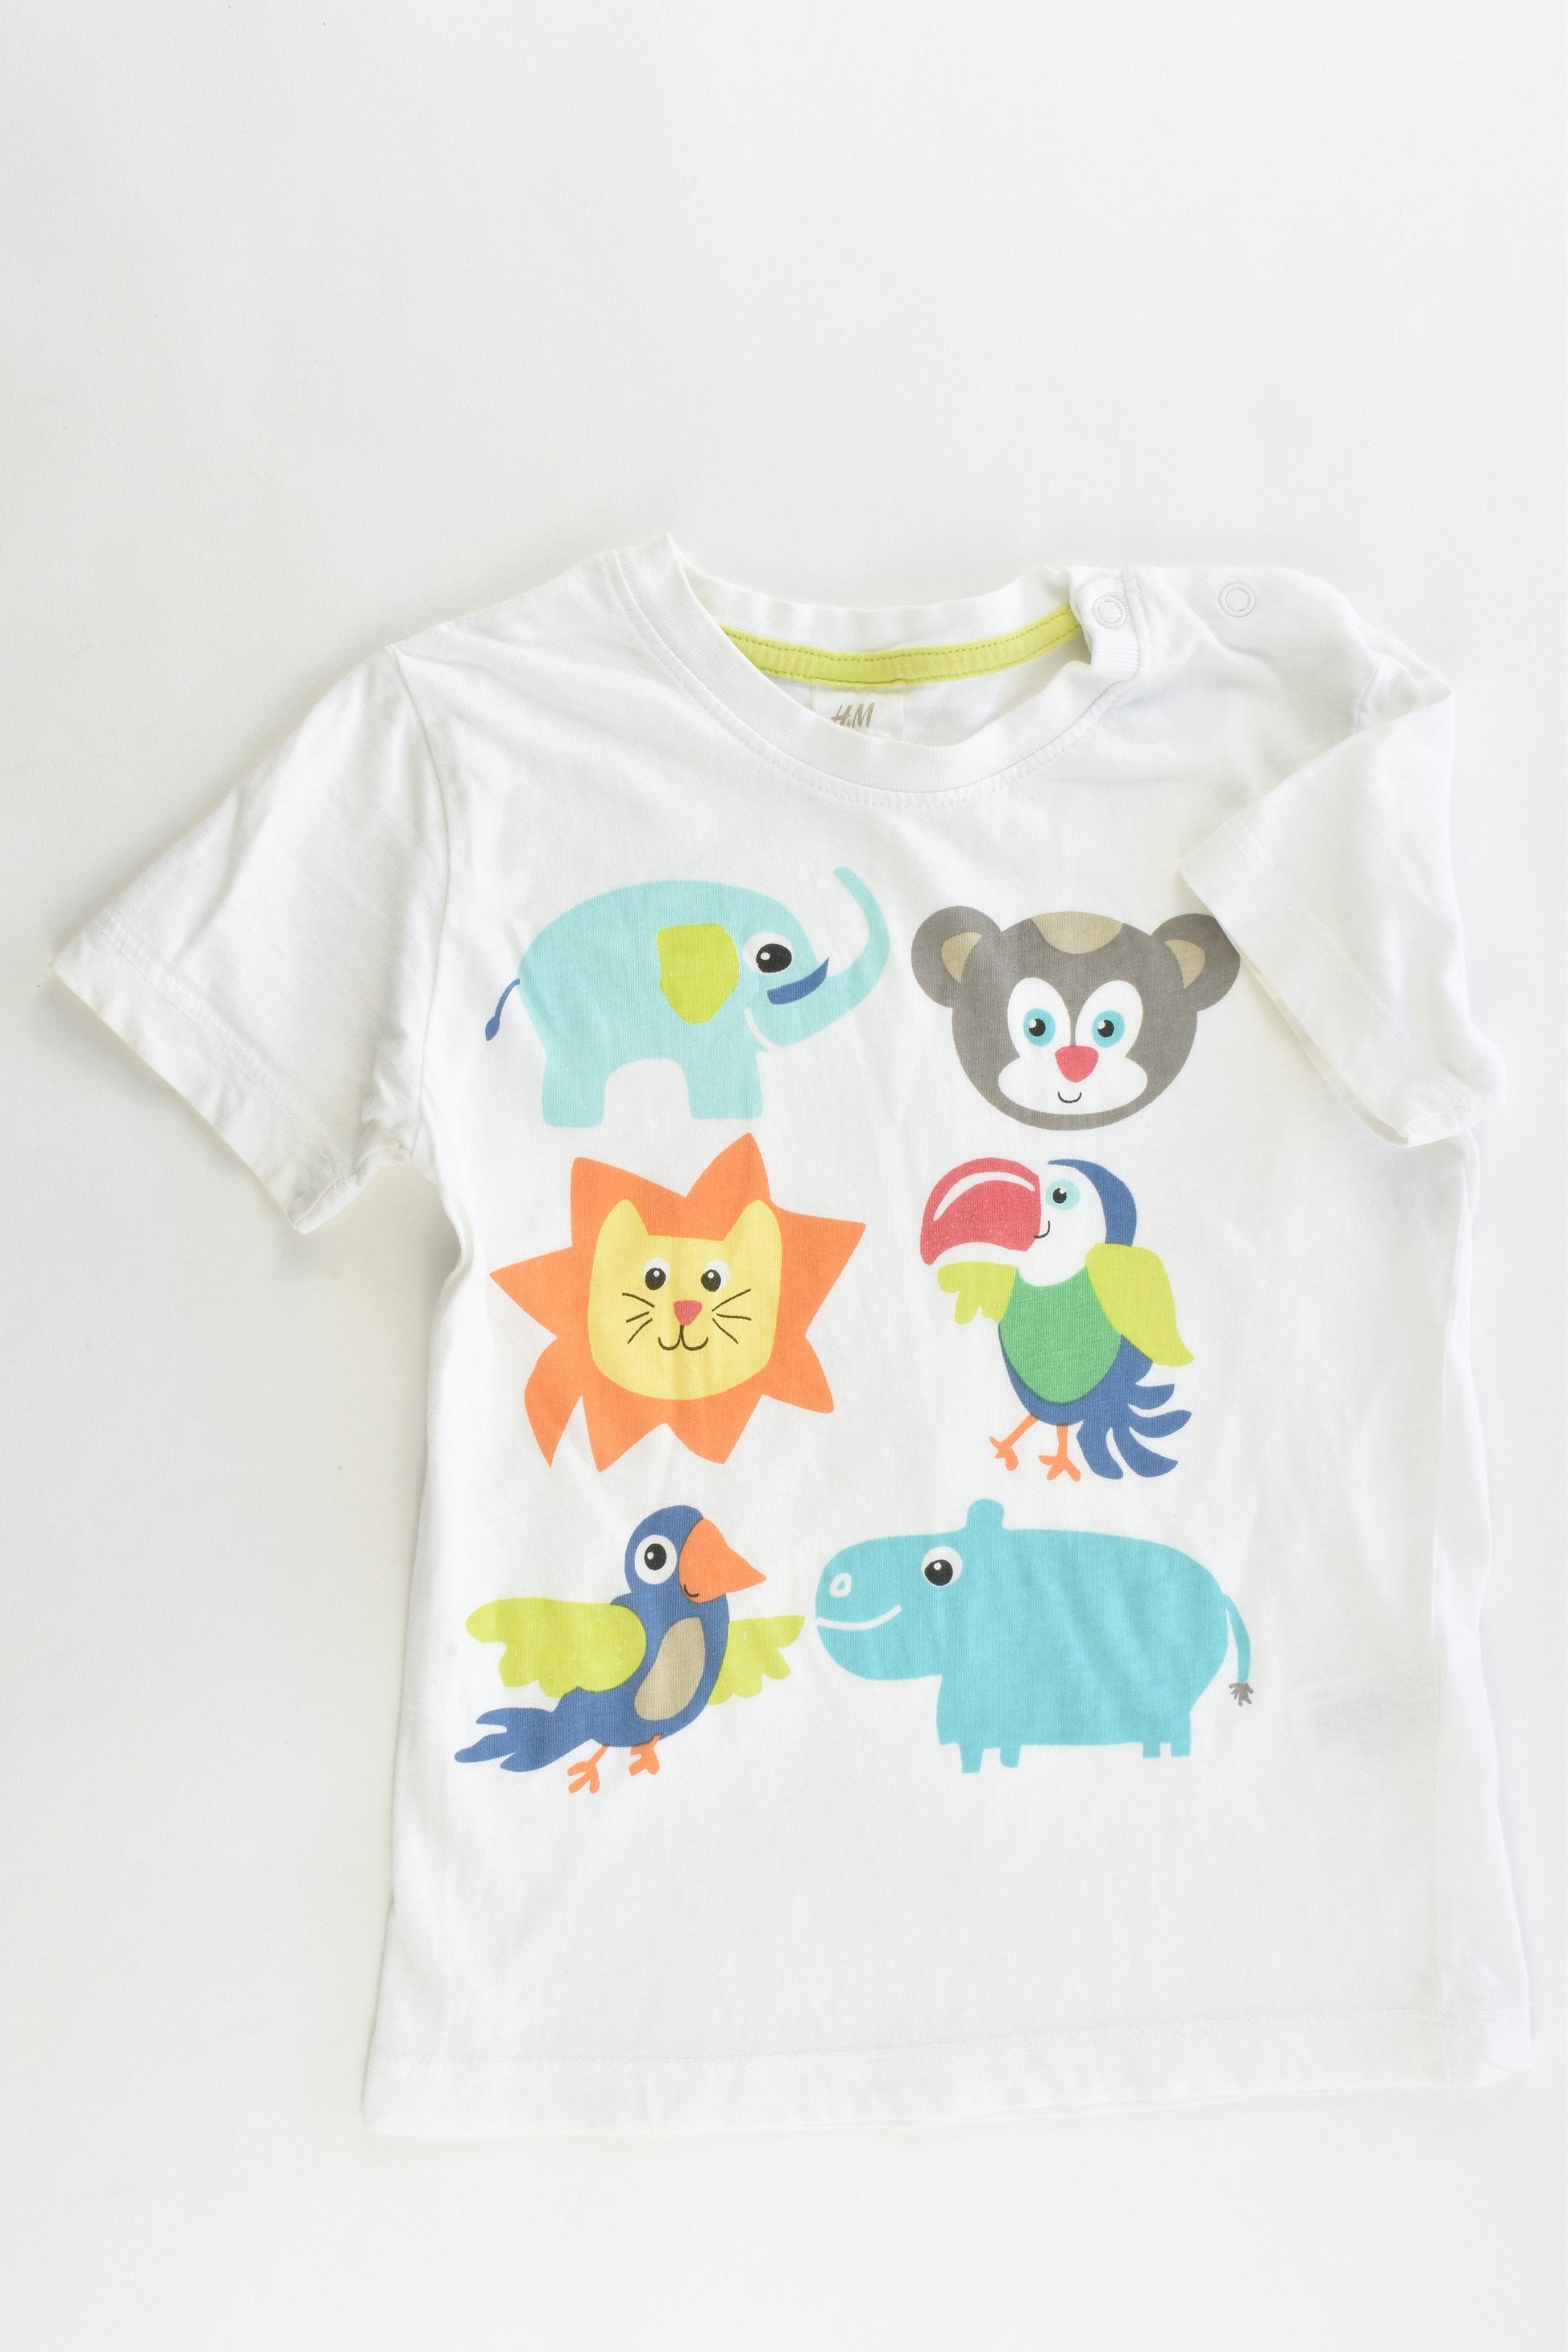 H&M Size 92 cm (1.5-2 years) Animals T-shirt